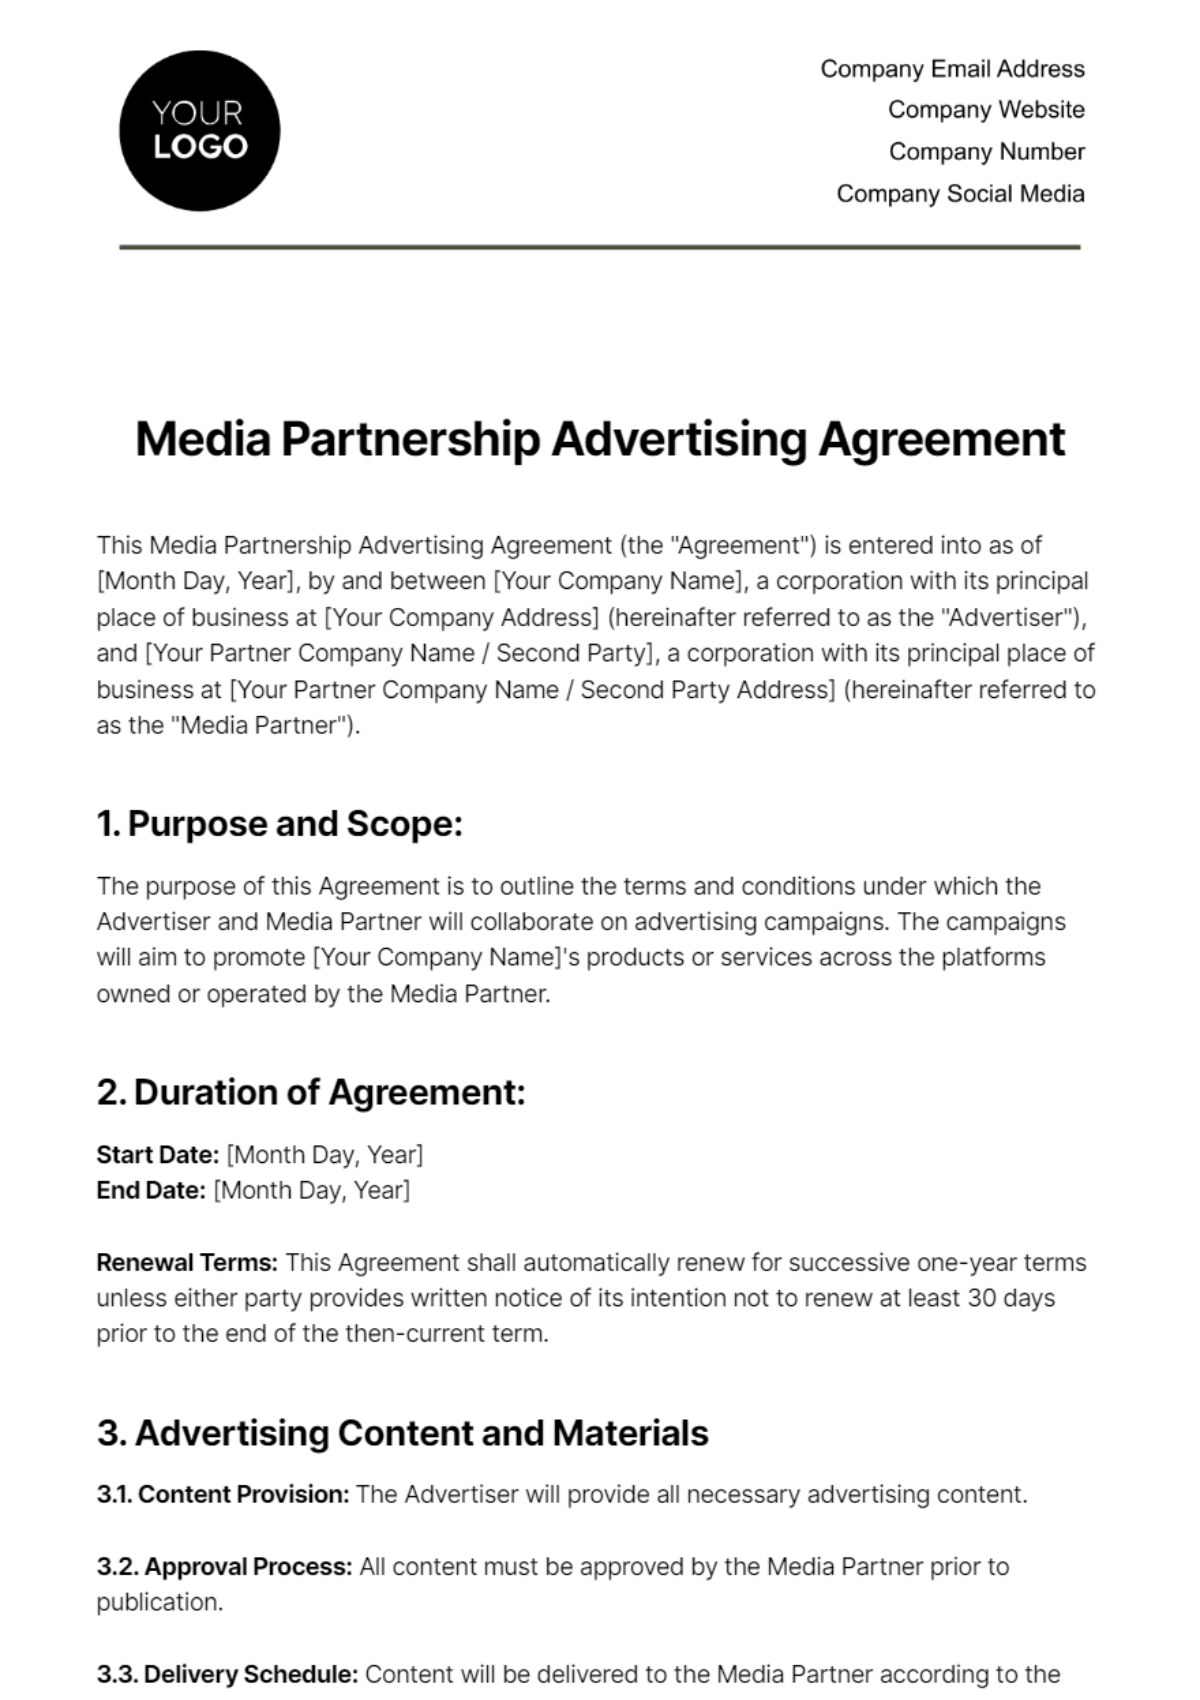 Media Partnership Advertising Agreement Template